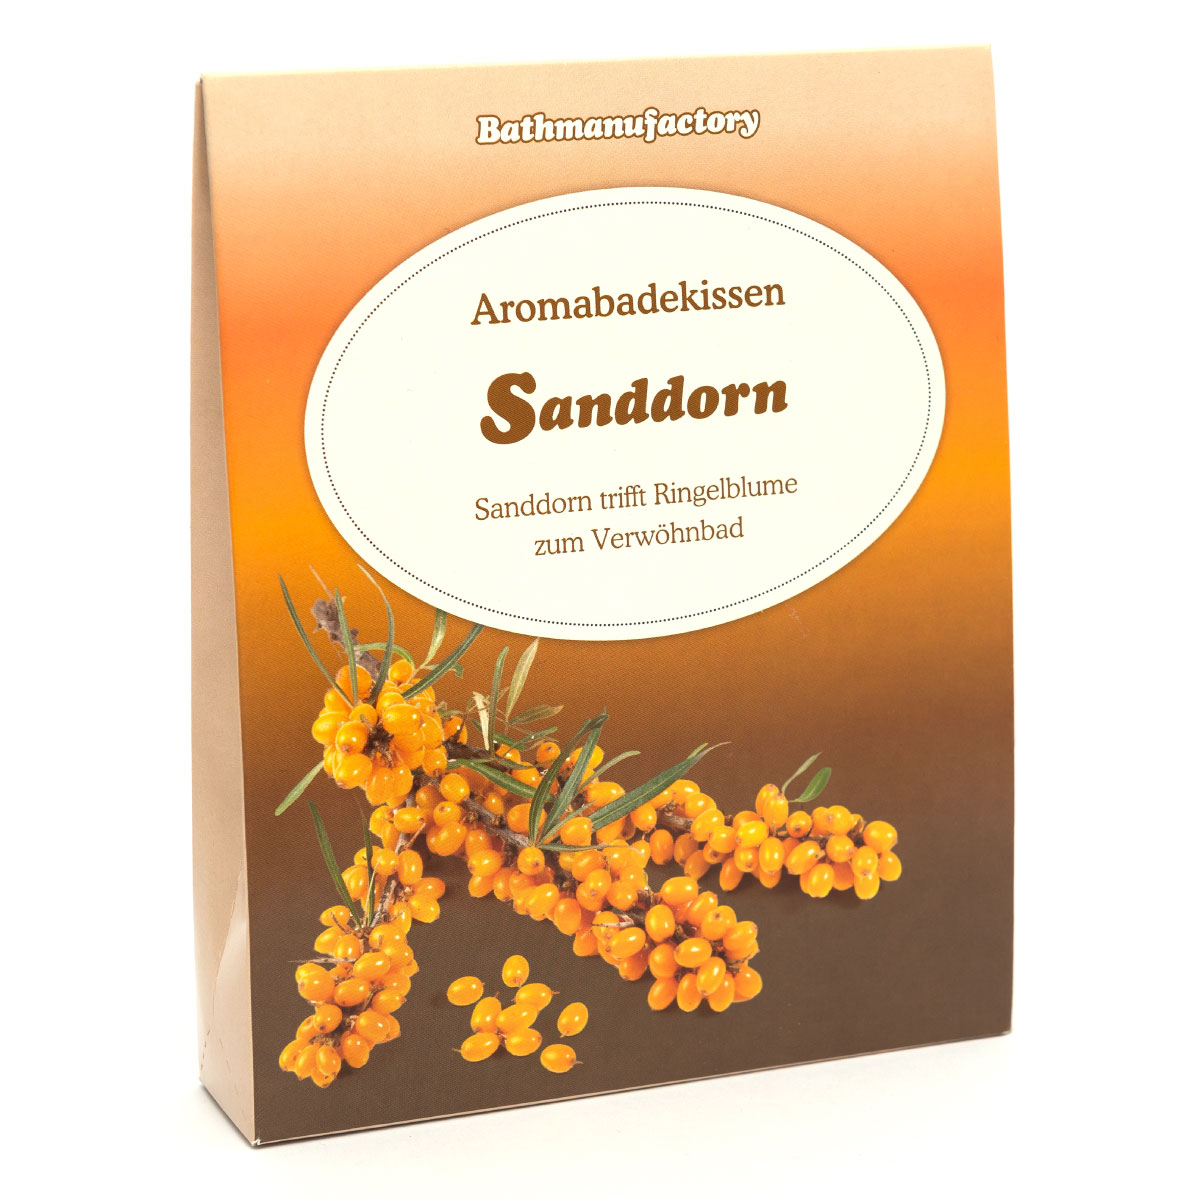 Sanddorn - Aromabadekissen